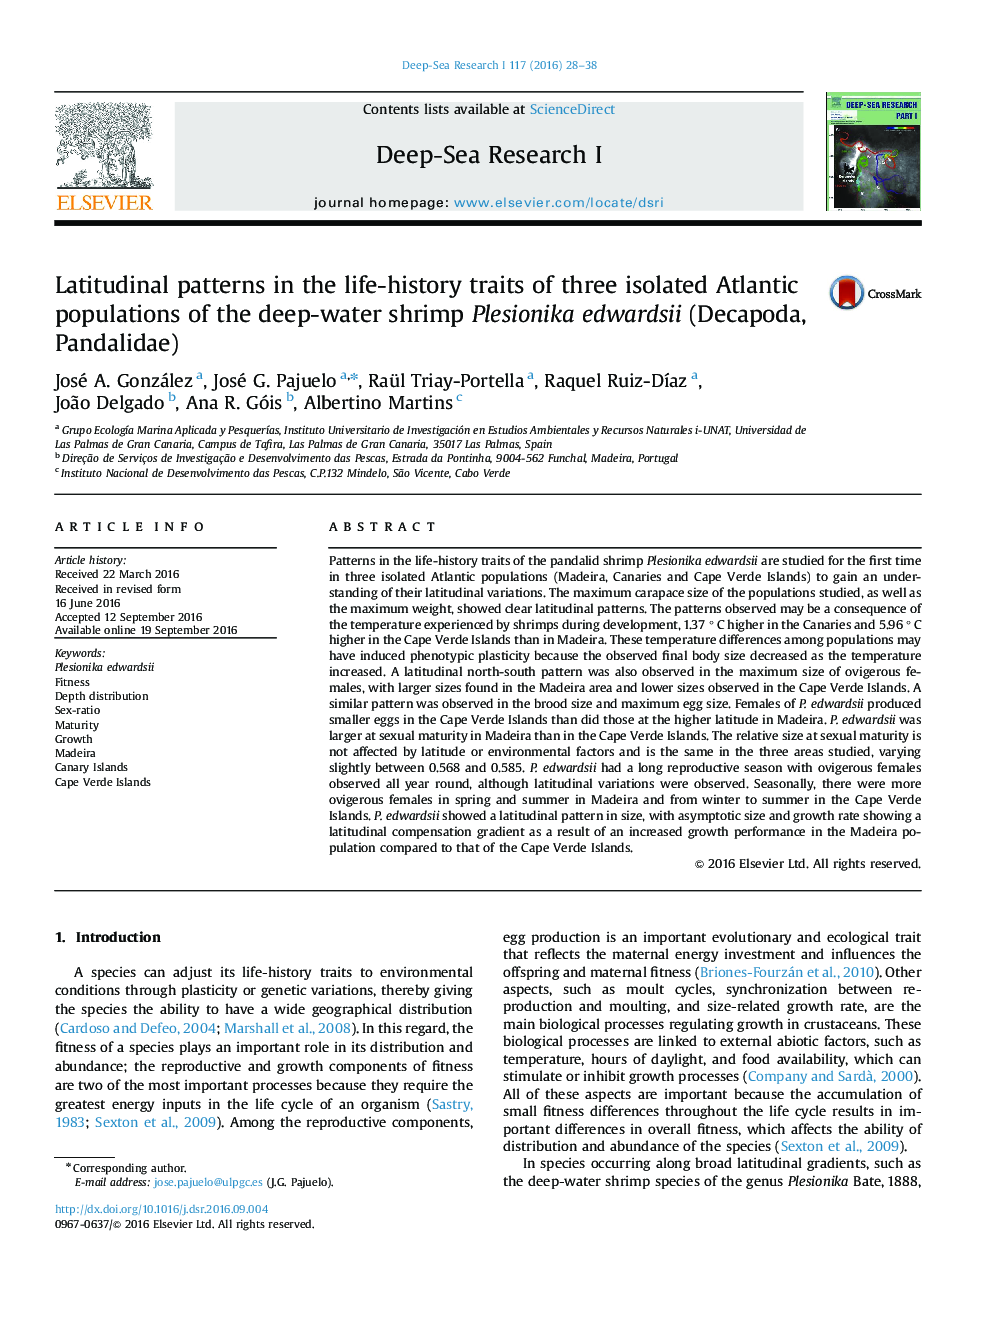 Latitudinal patterns in the life-history traits of three isolated Atlantic populations of the deep-water shrimp Plesionika edwardsii (Decapoda, Pandalidae)